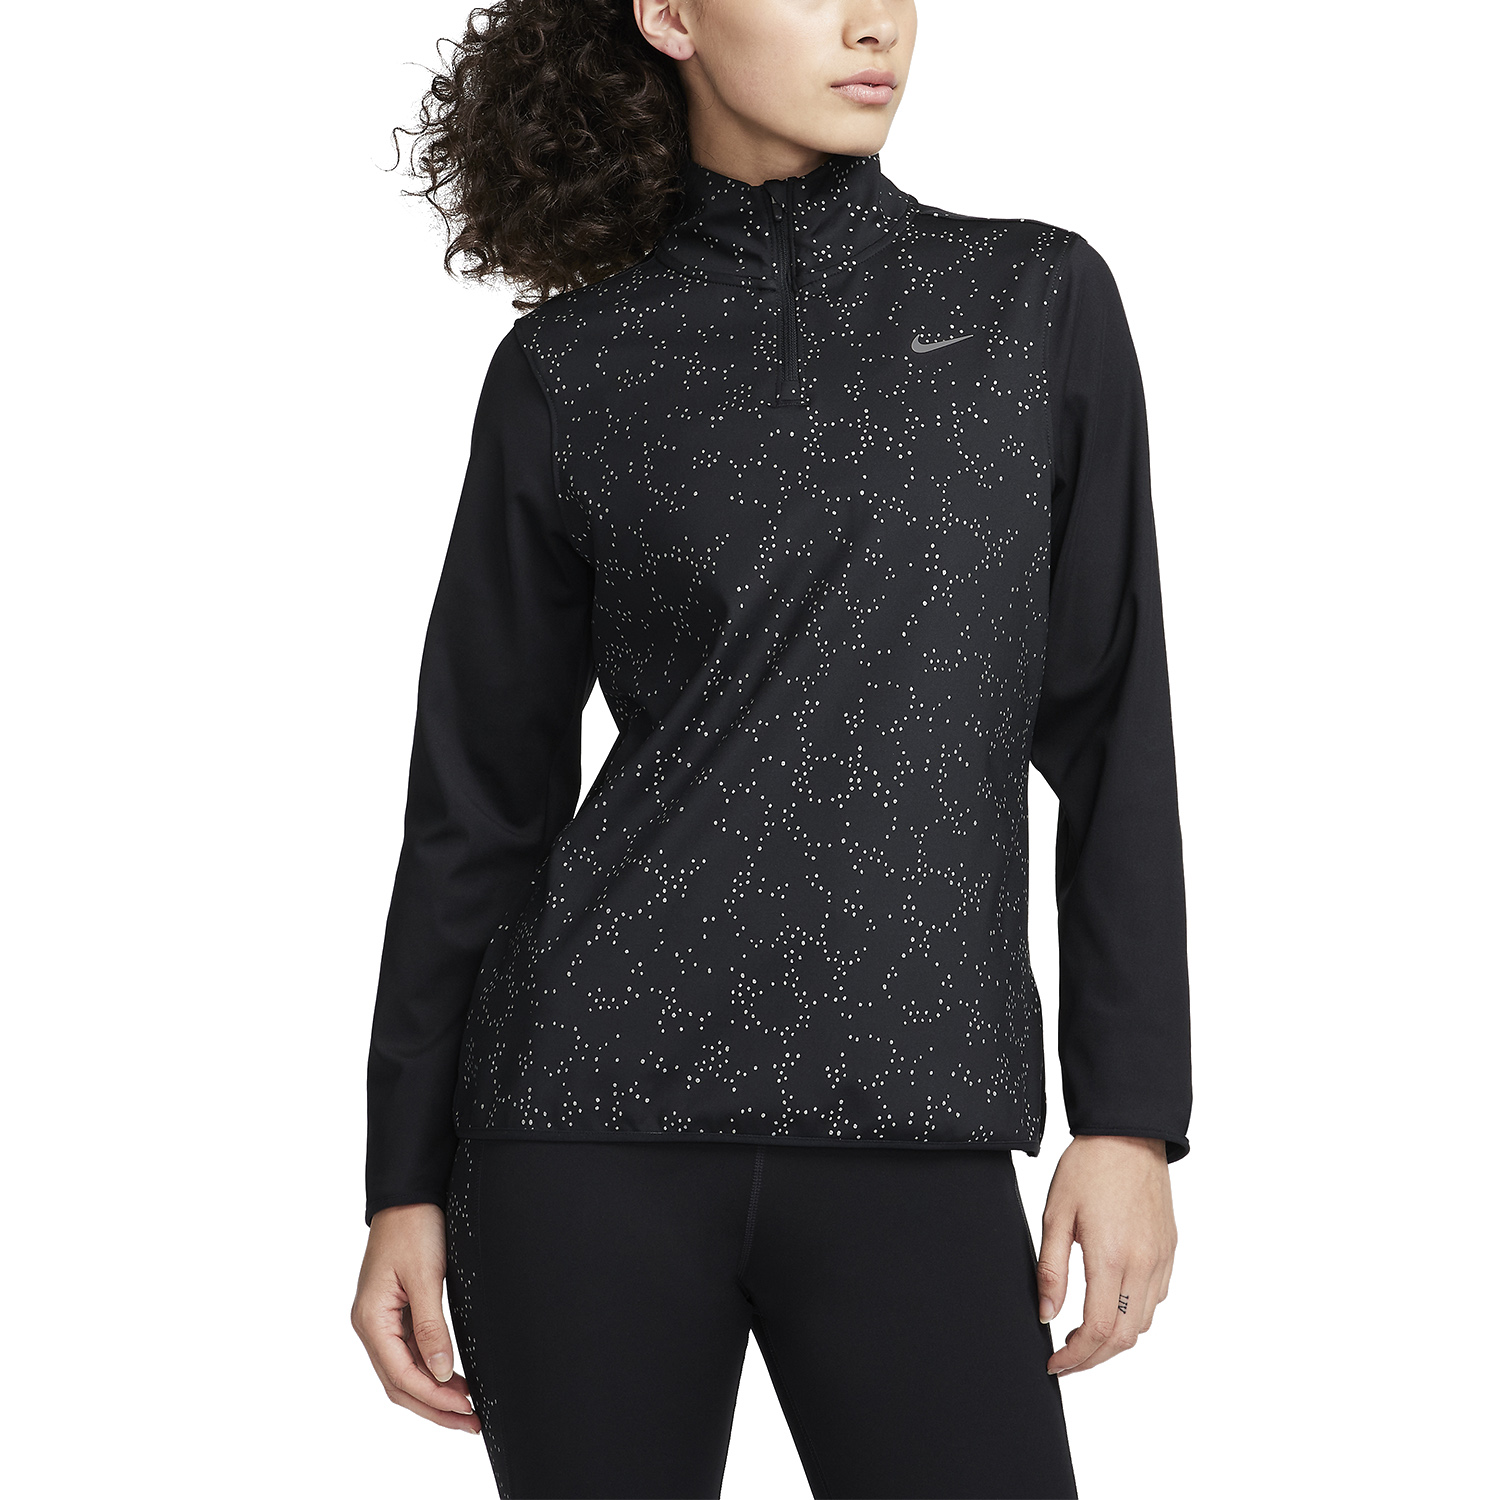 Nike Swift Element Camisa - Black/Reflective Silver